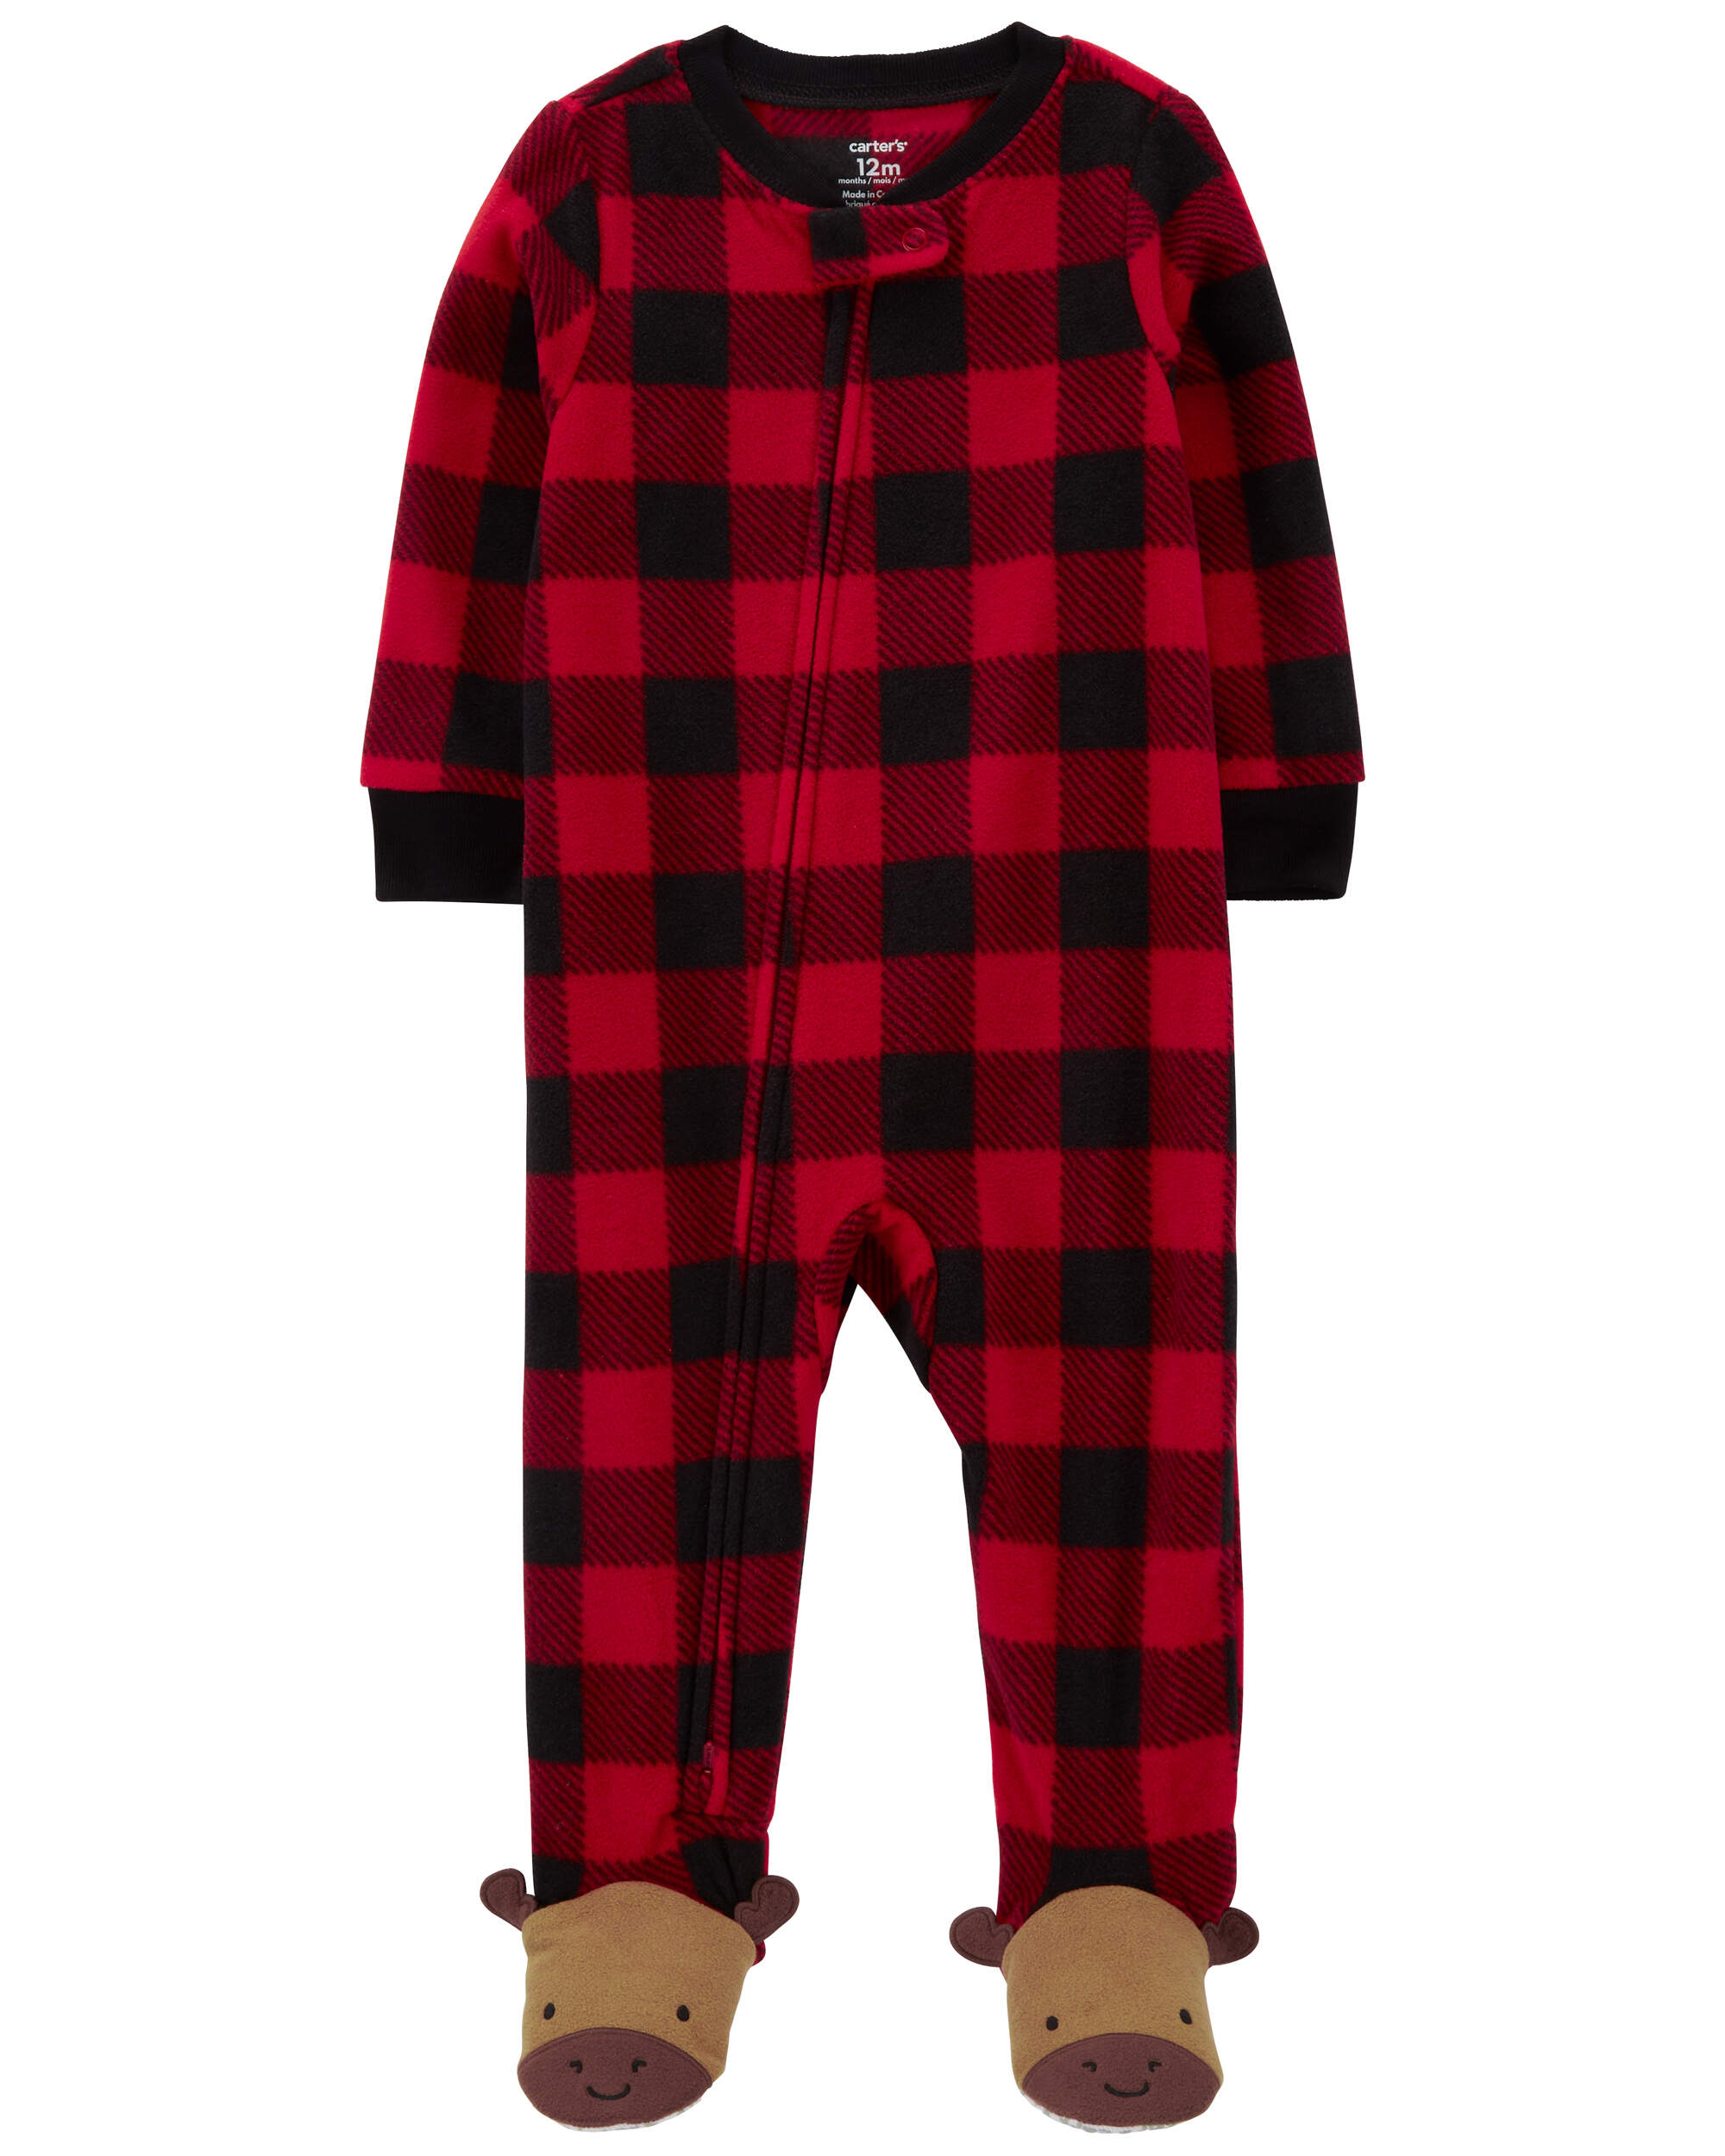 Toddler 1-Piece Buffalo Check Fleece Footie Pyjamas